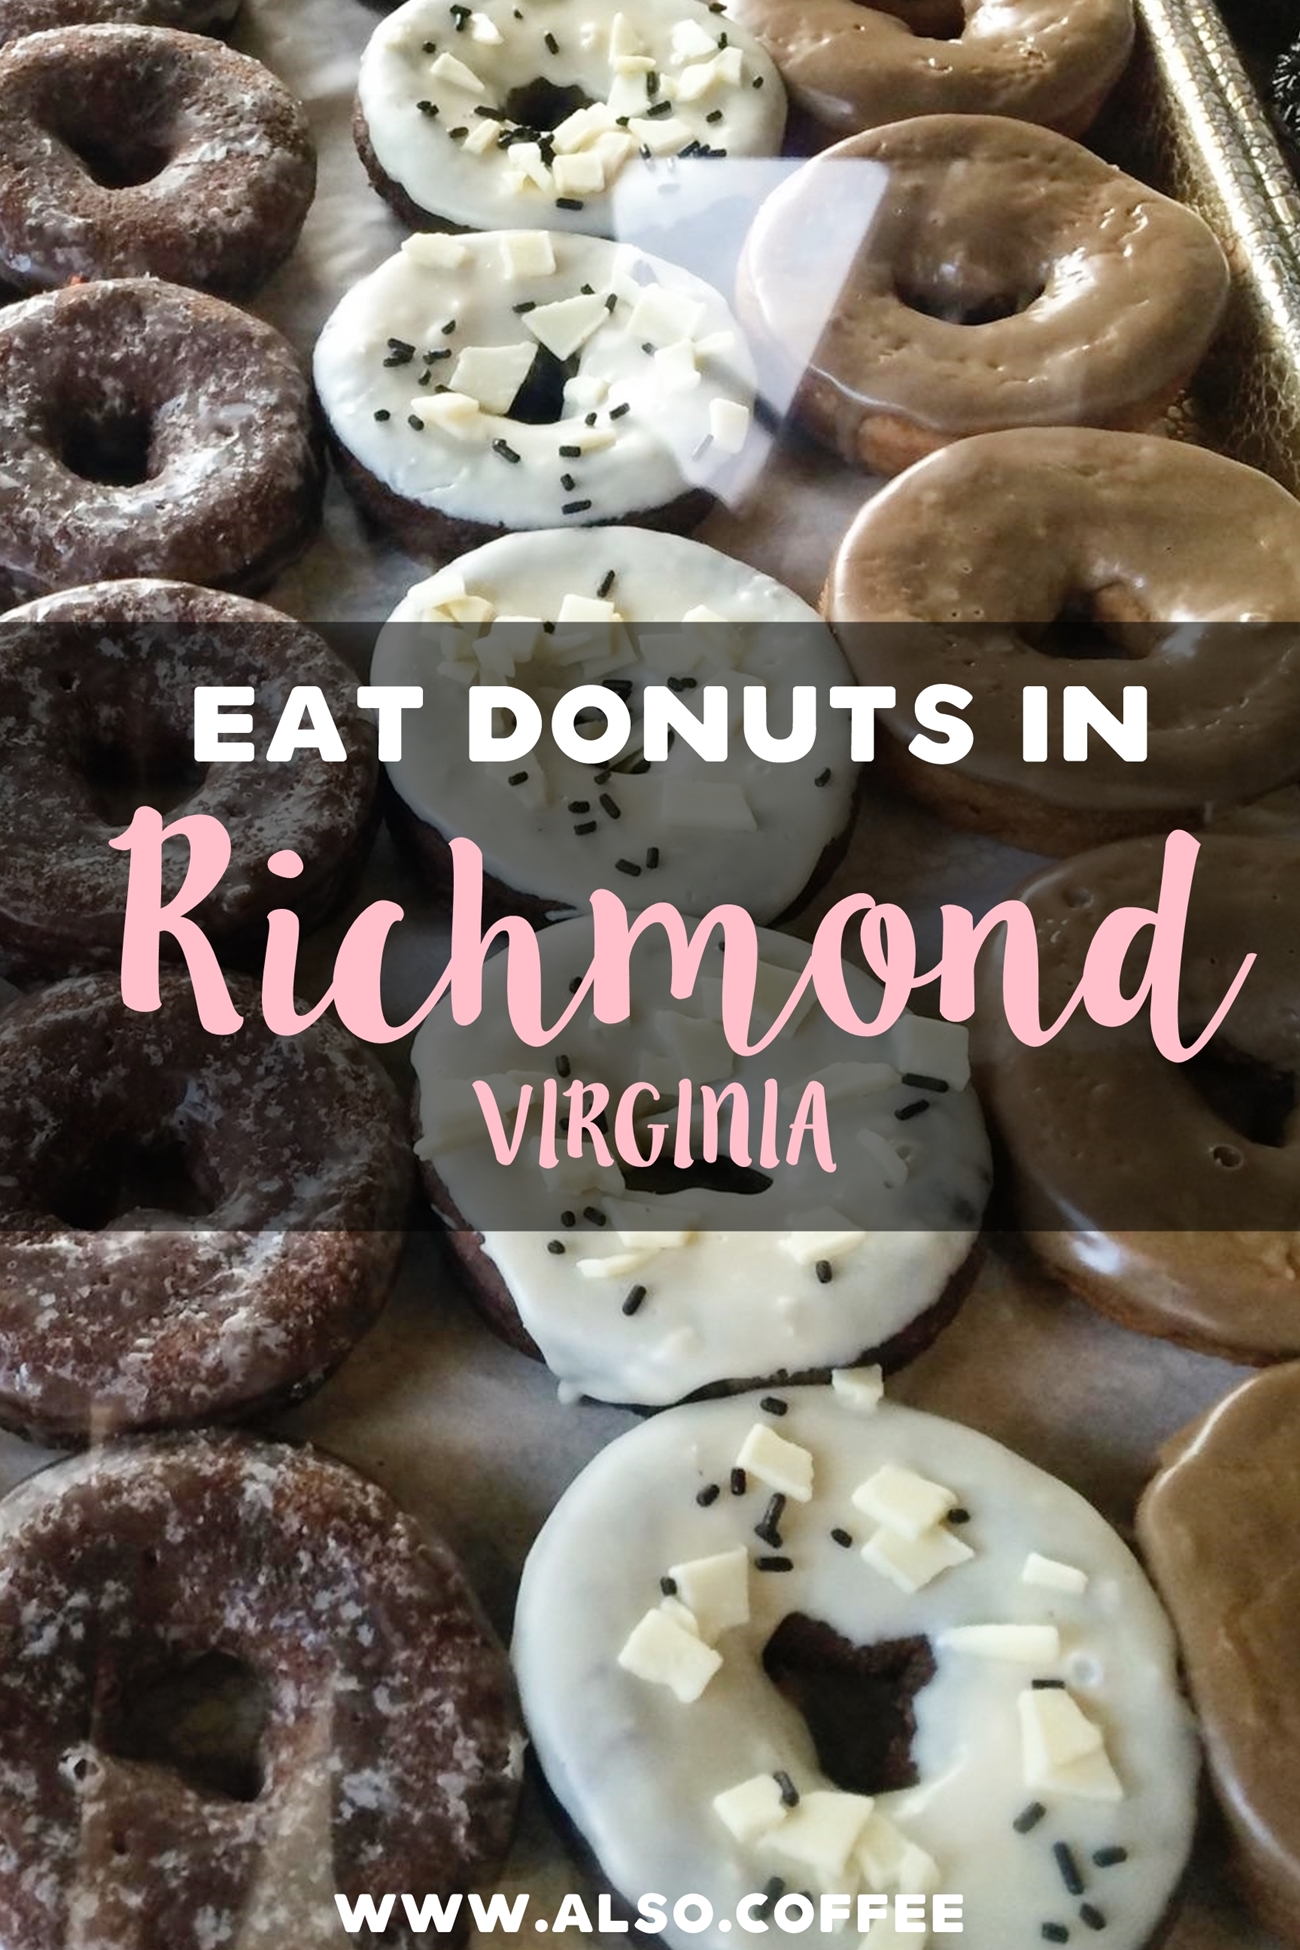 Dixie Donuts in Richmond, VA